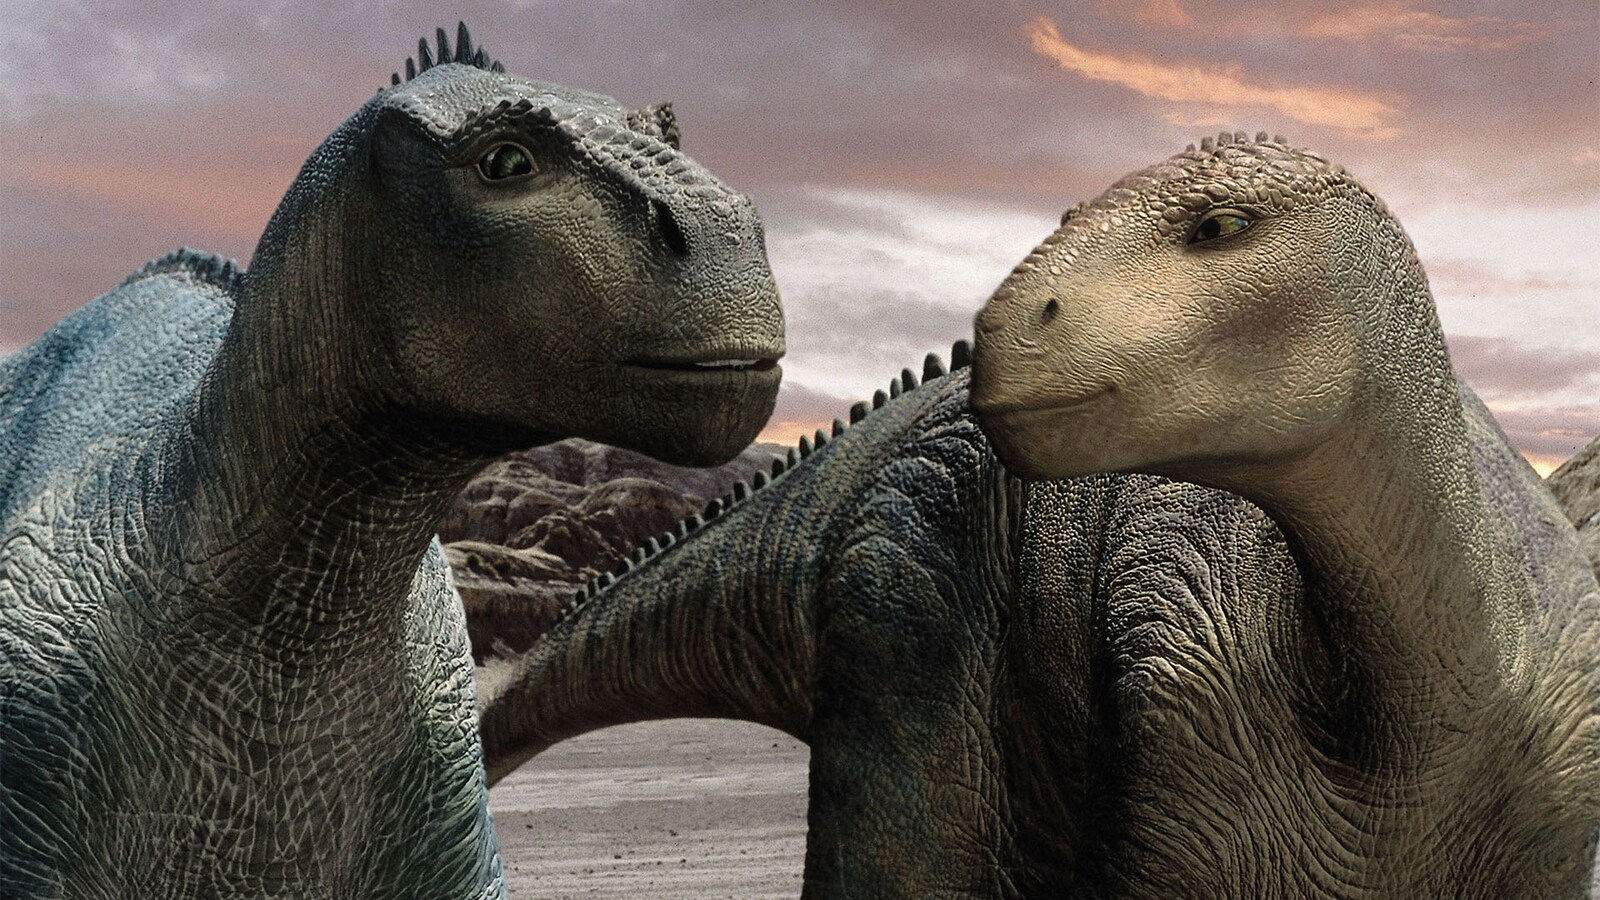 dinosaur-2000